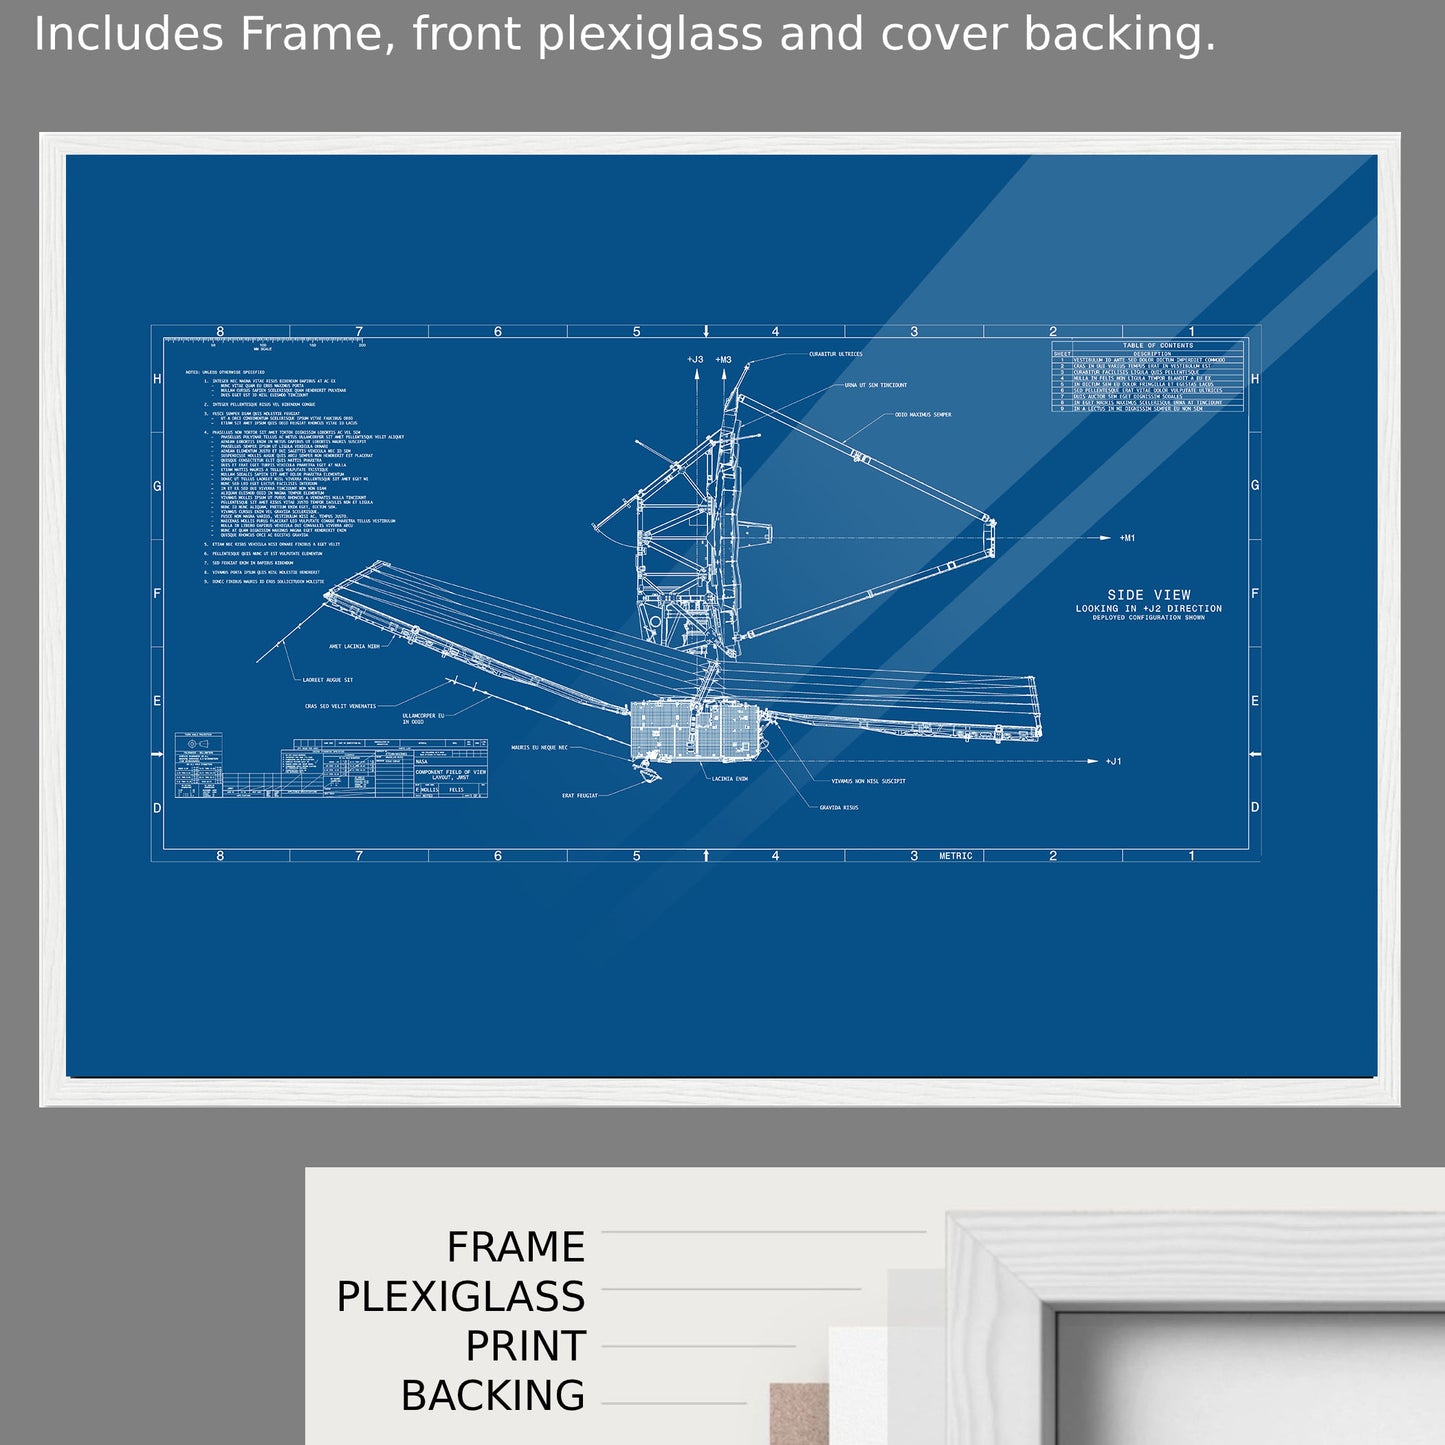 Blueprints of the James Webb Space Telescope Poster (Blue)